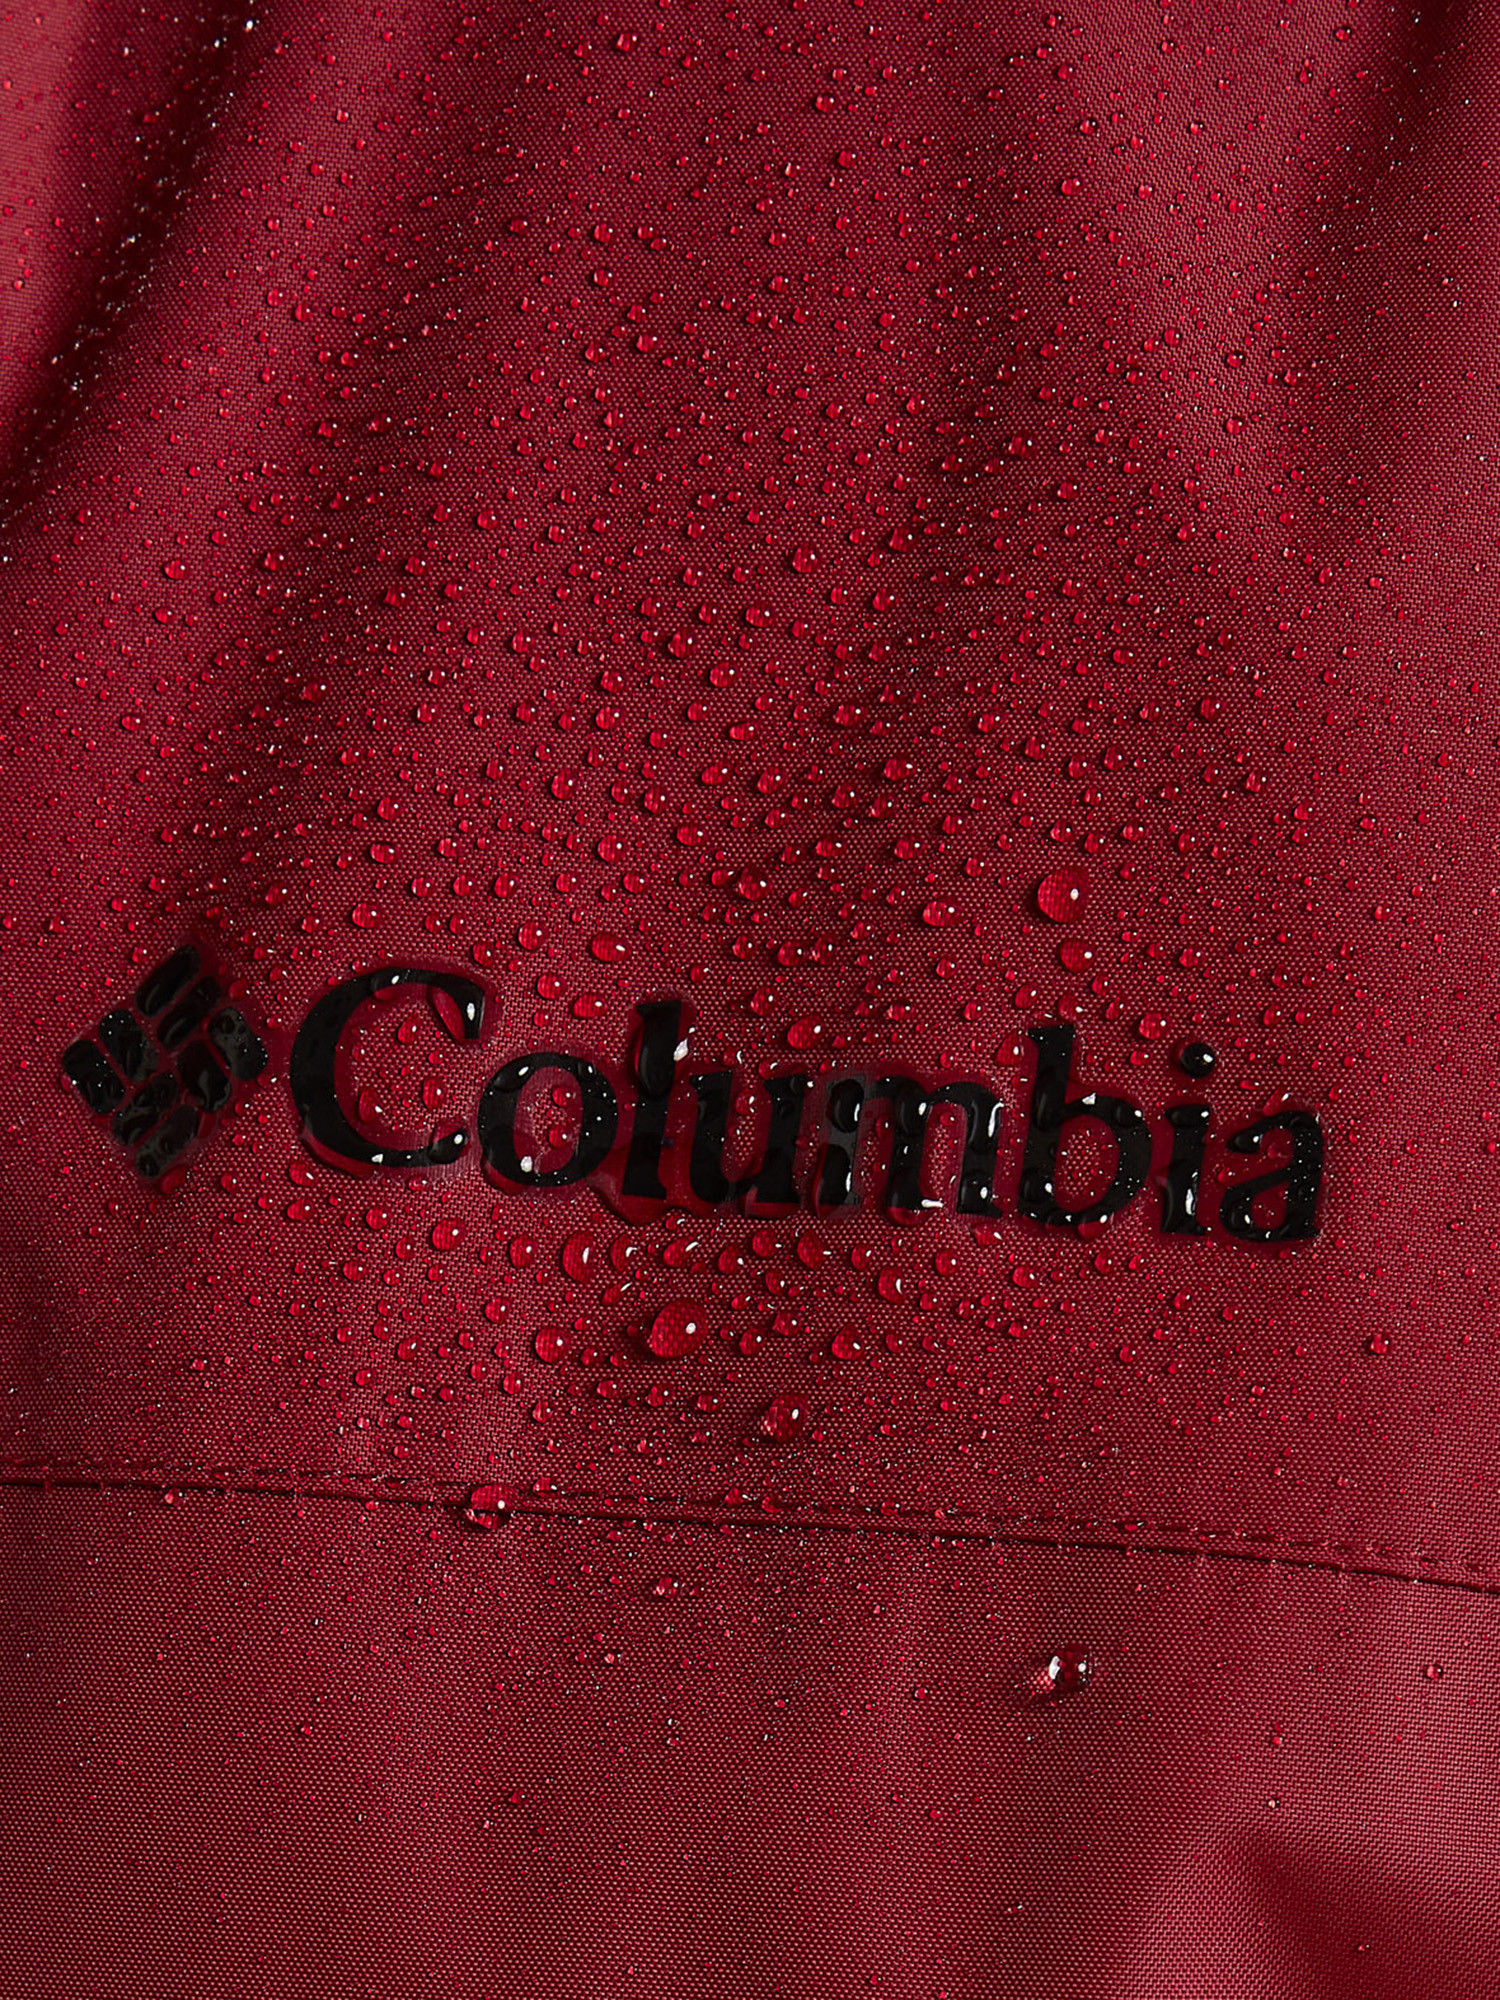 Ветровка мужская Columbia Watertight II Jacket